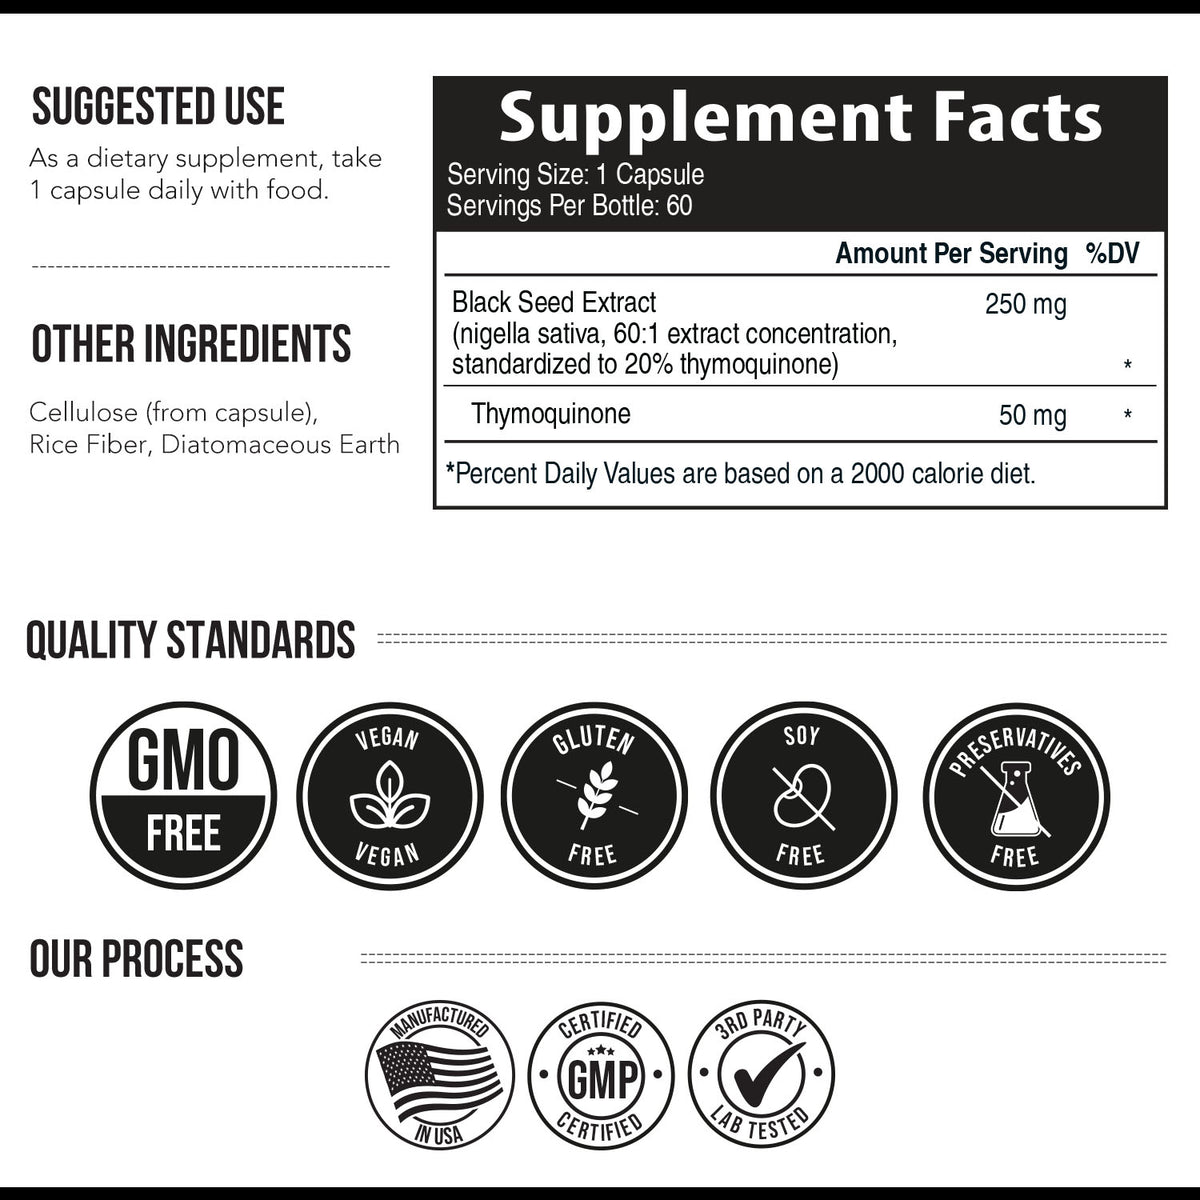 TQ-Advanced® 4X Black Seed Extract Capsules